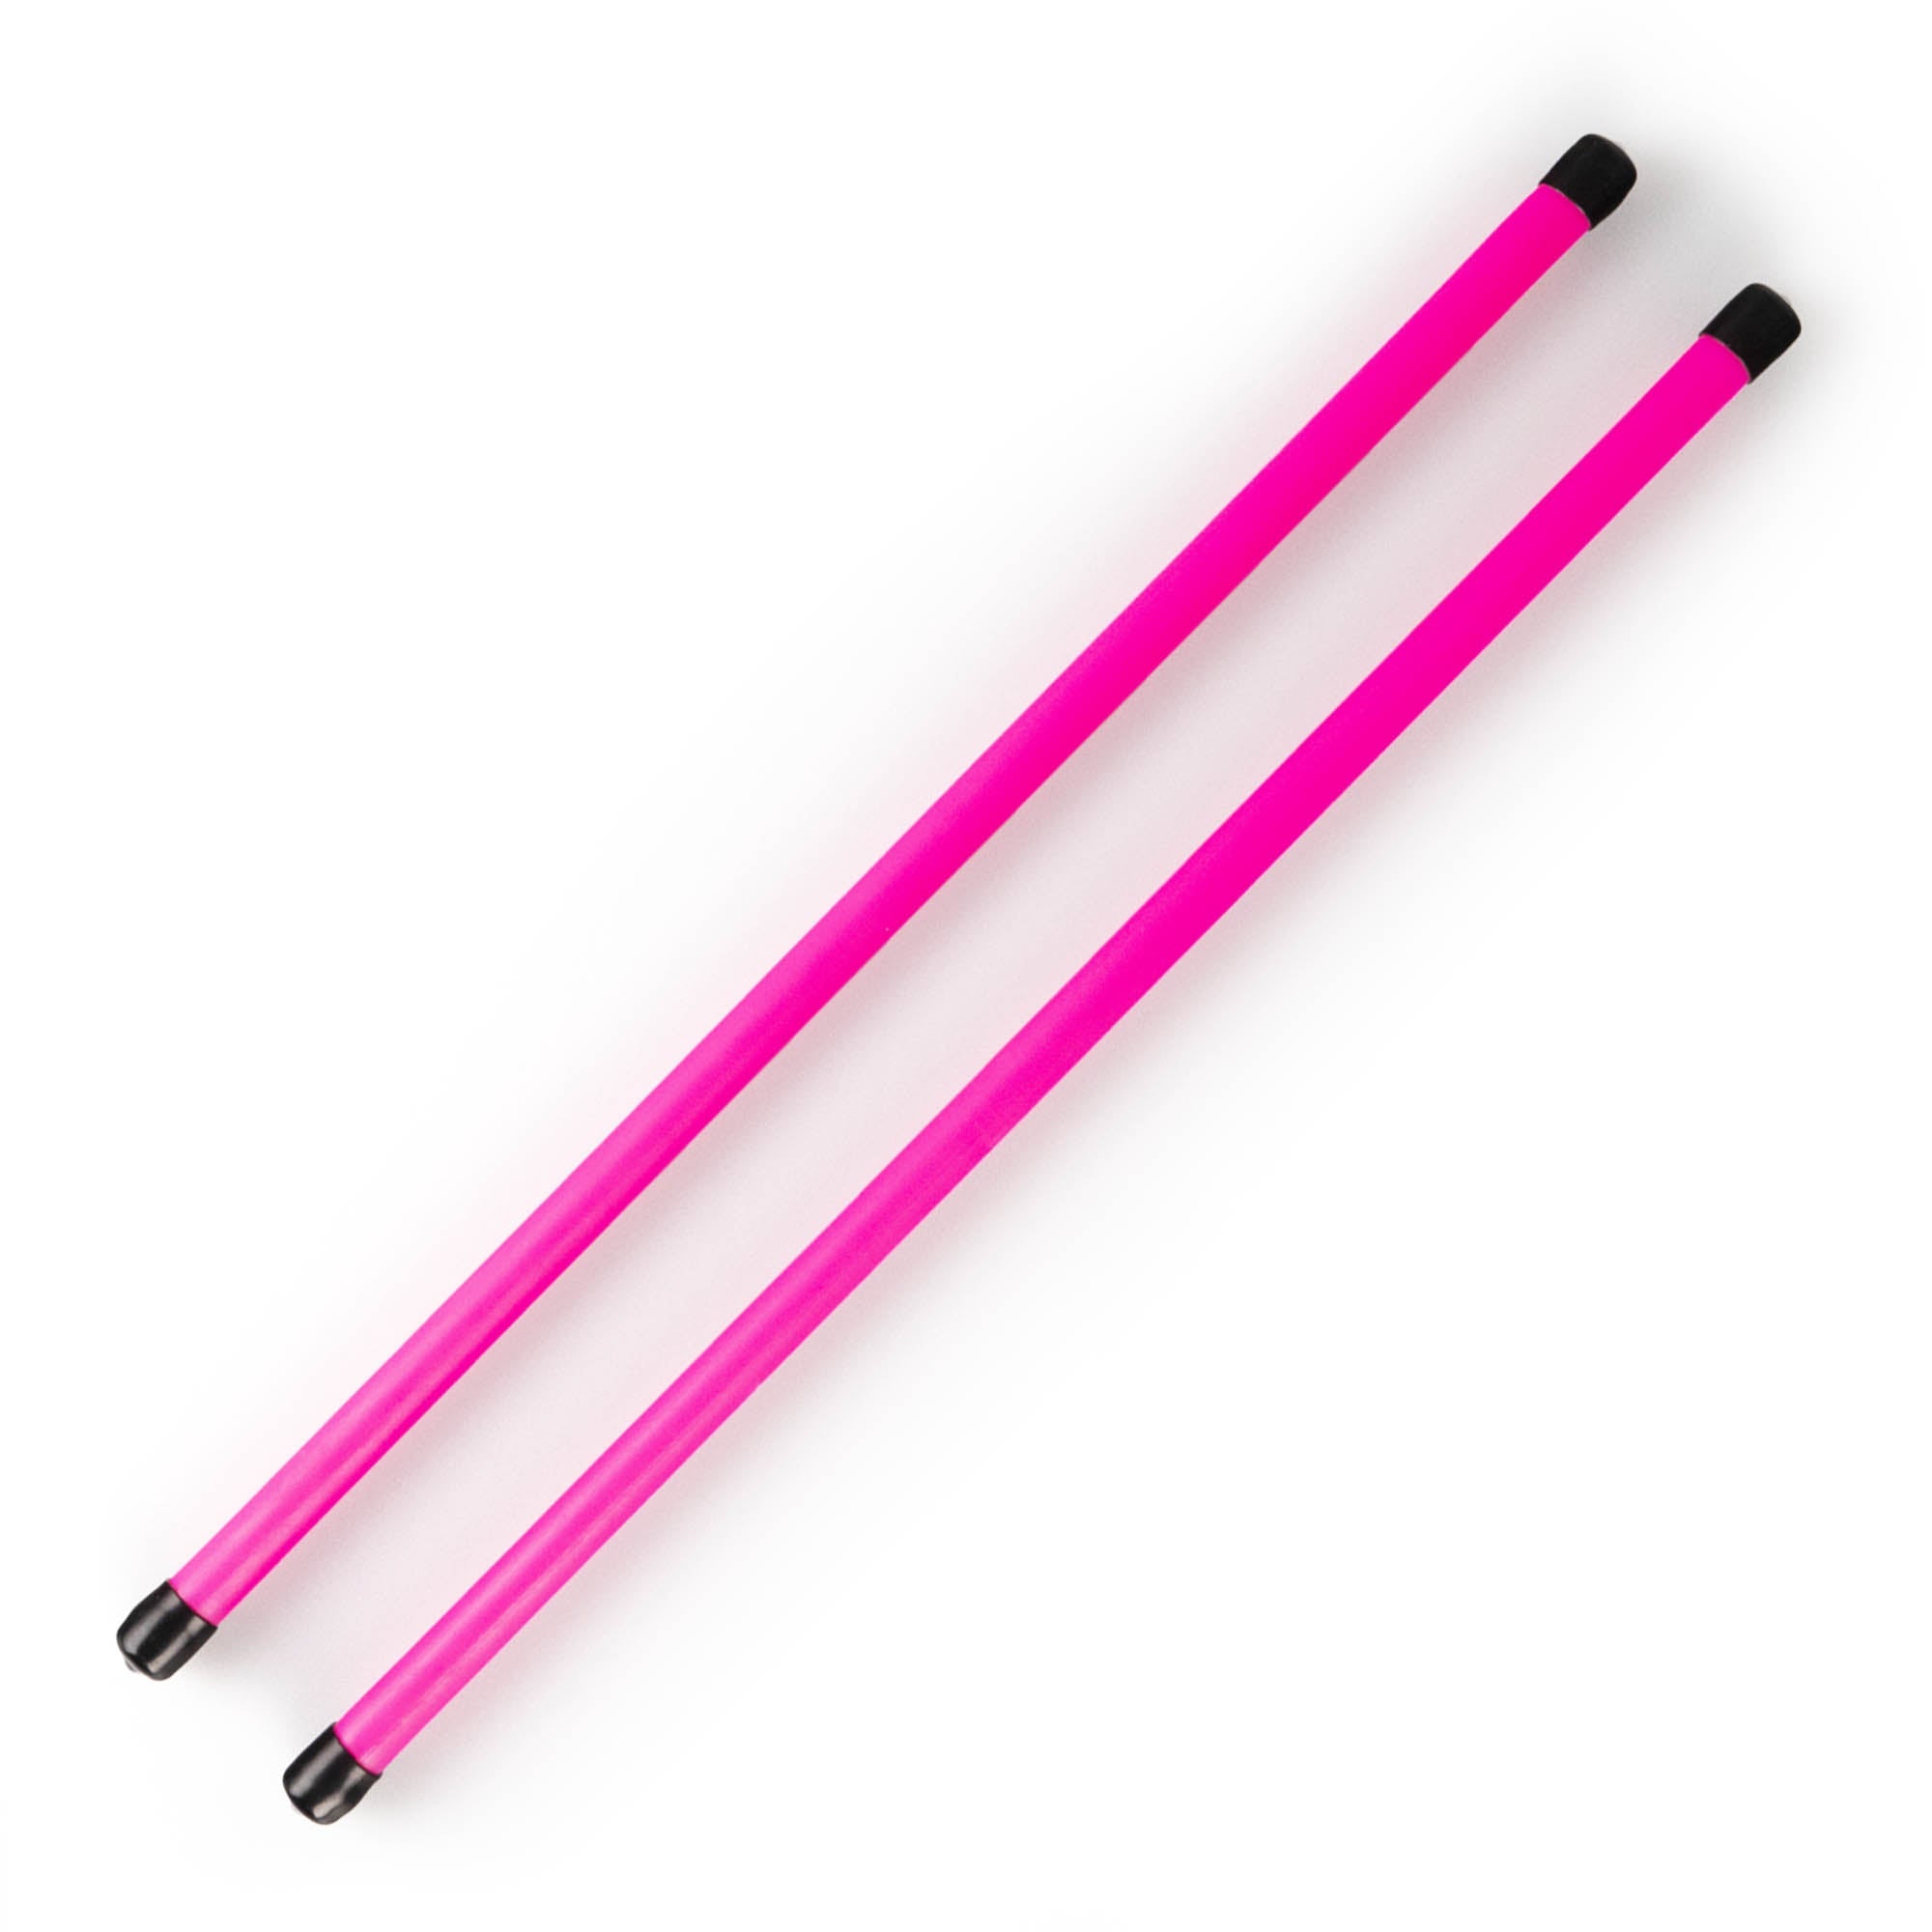 A pair of UV pink devilstick handsticks with black caps on each end